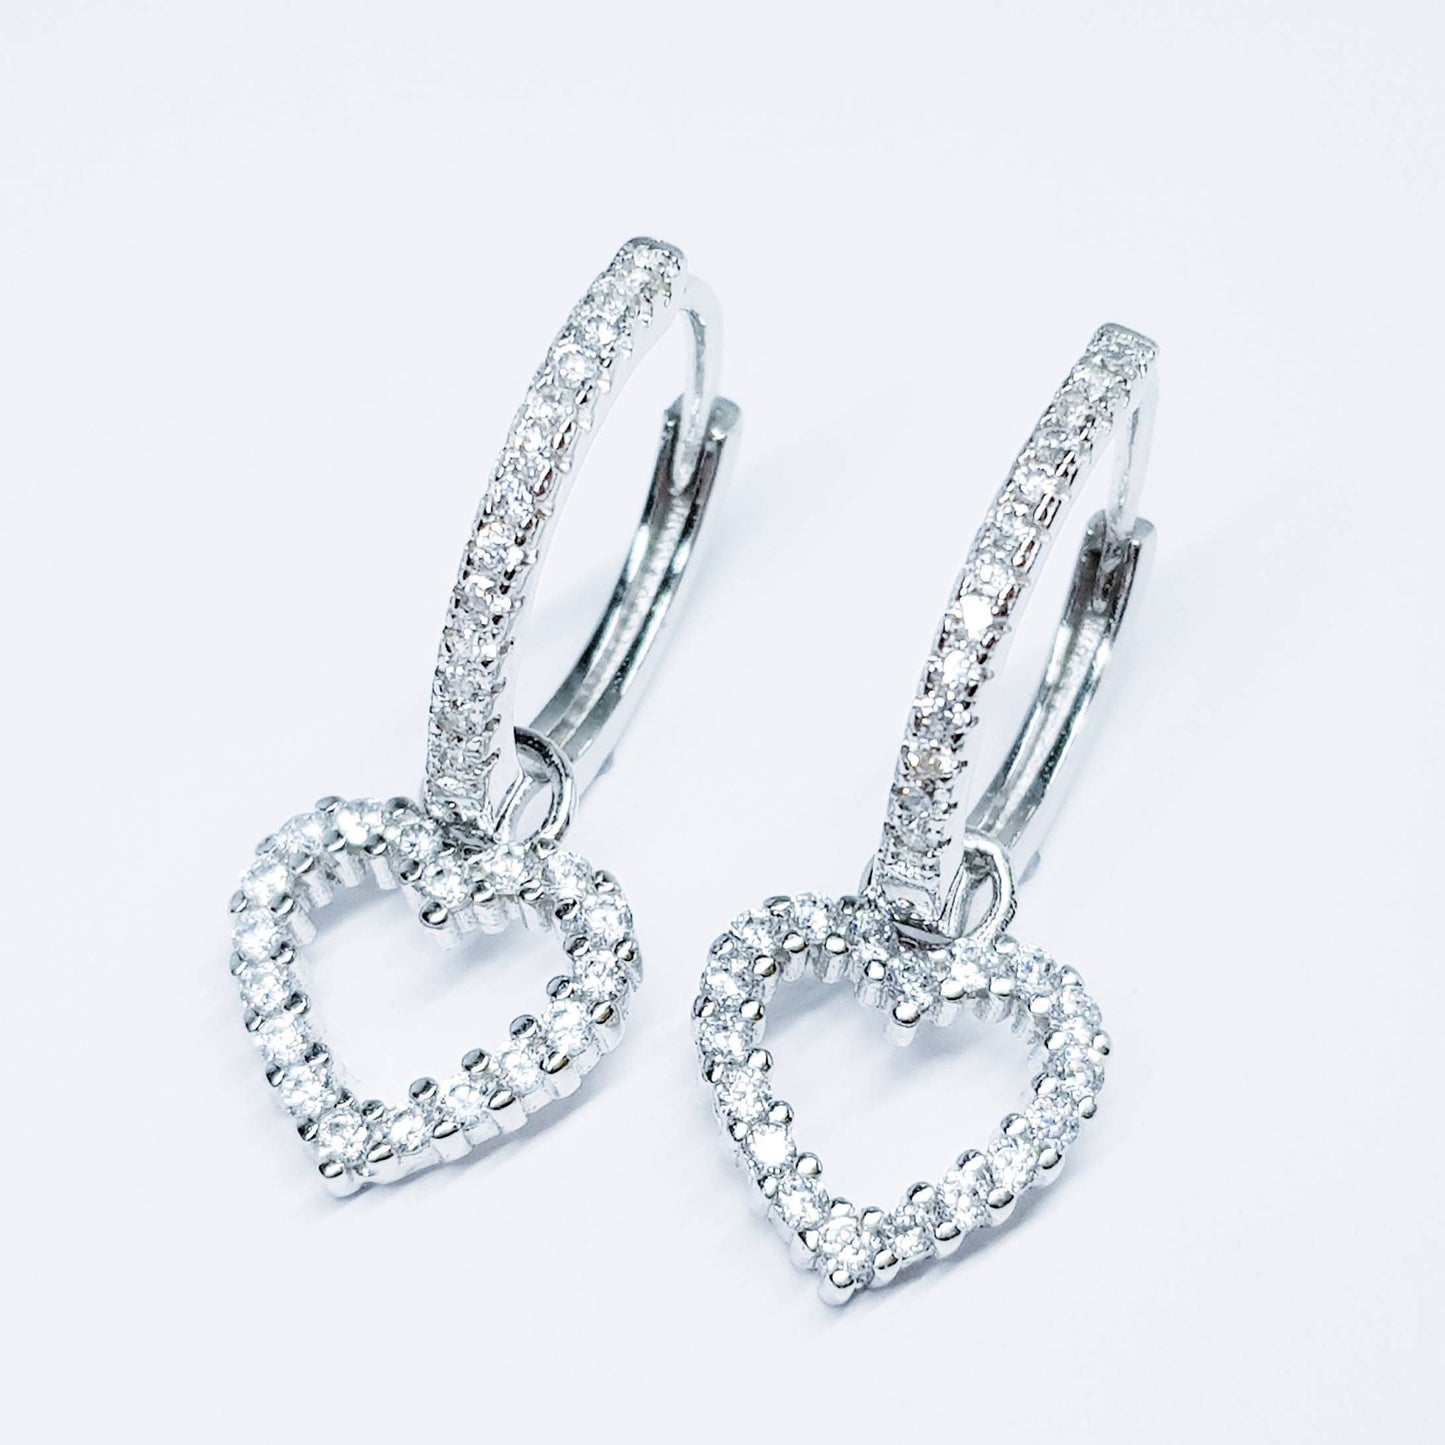 Thin hoop earrings, with removable heart charm, two earrings in one, silver Huggie earrings